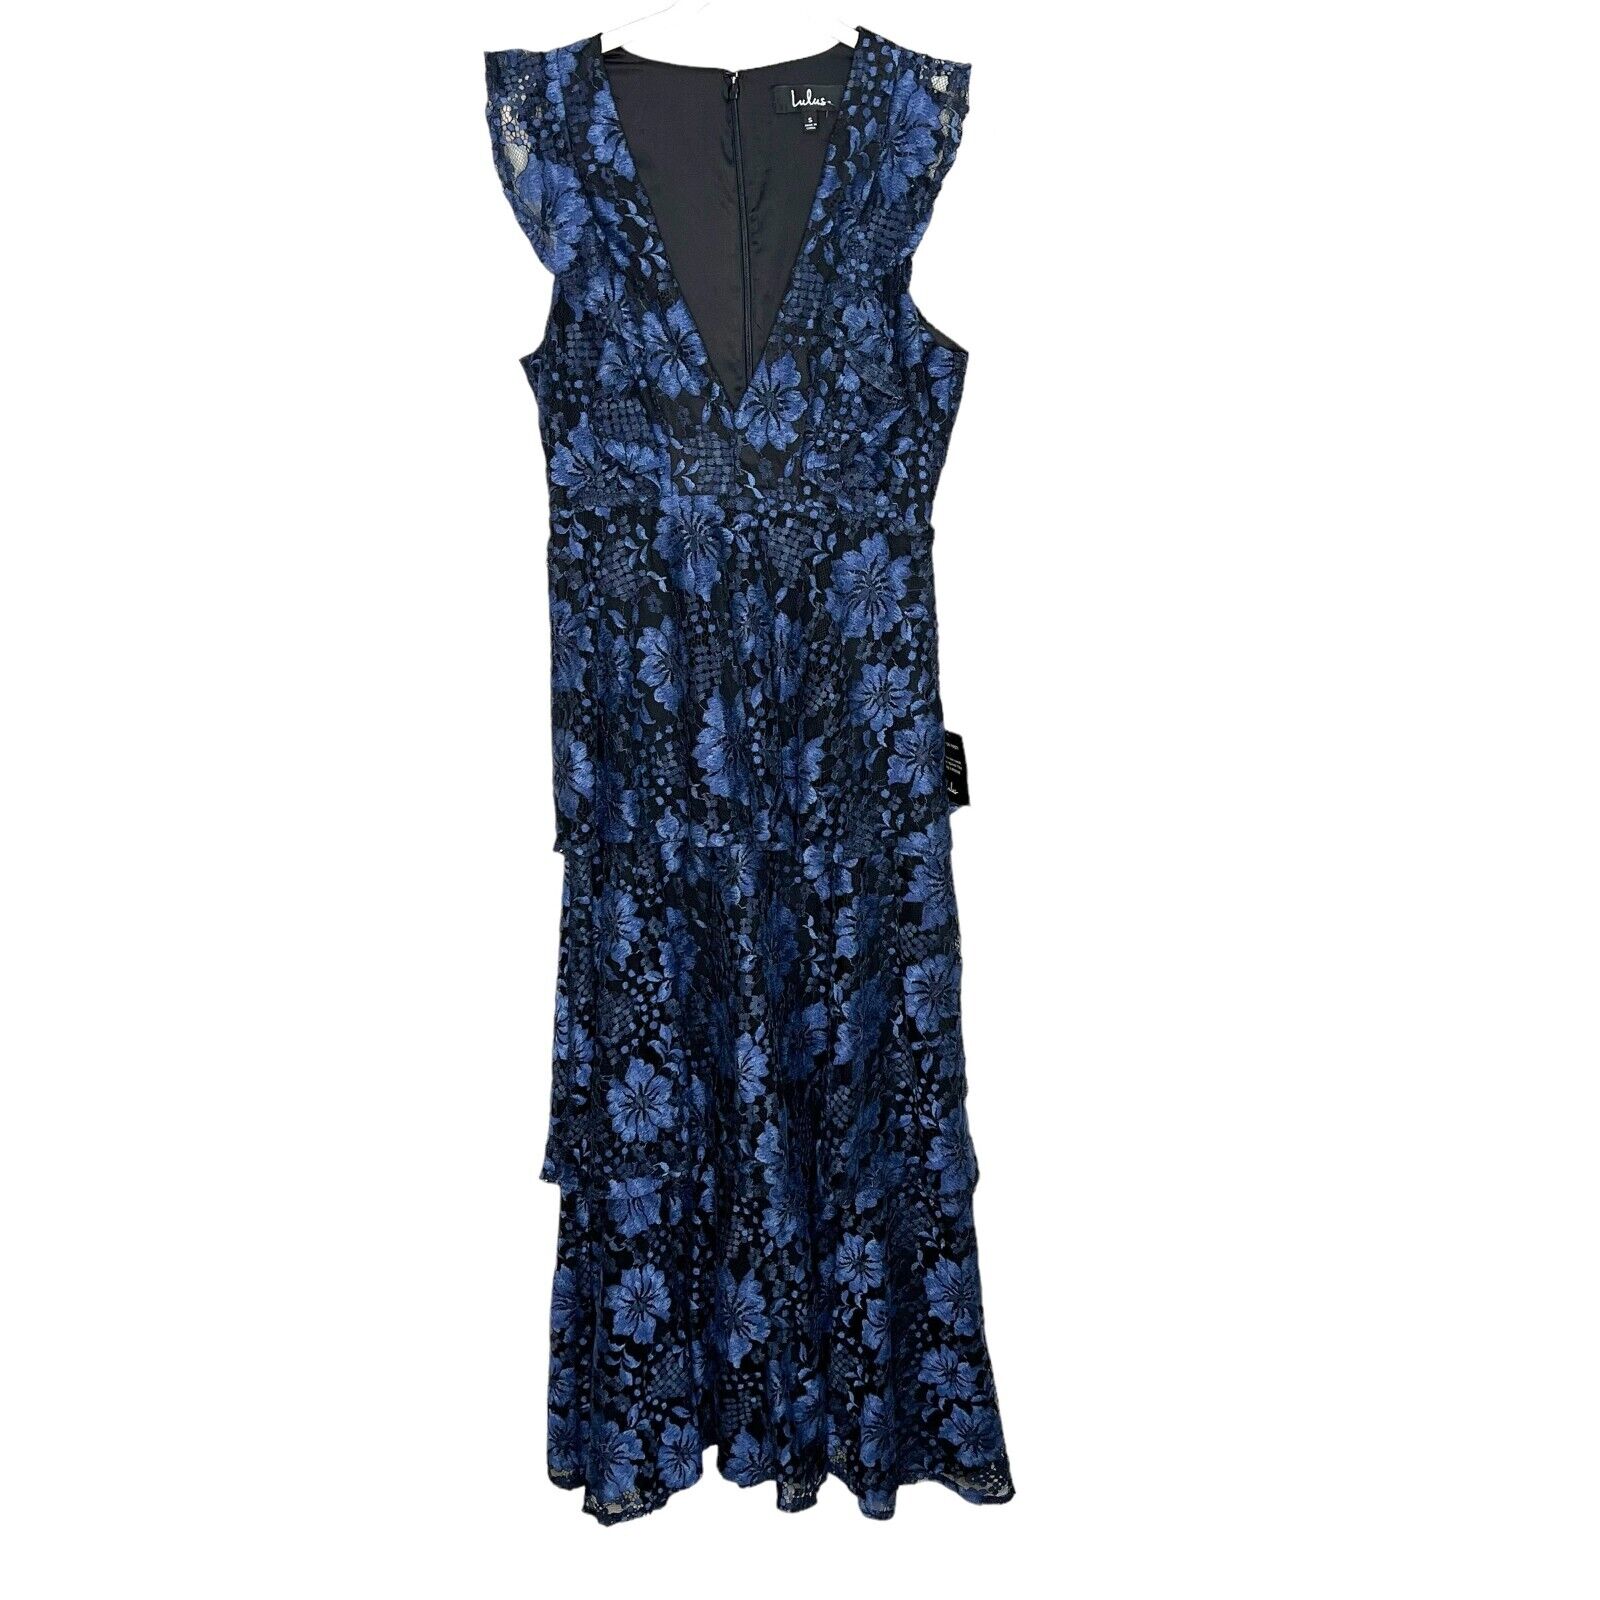 Lulu's Molinetto Navy Blue Black Lace Ruffled Tiered Maxi Dress Size Small NEW